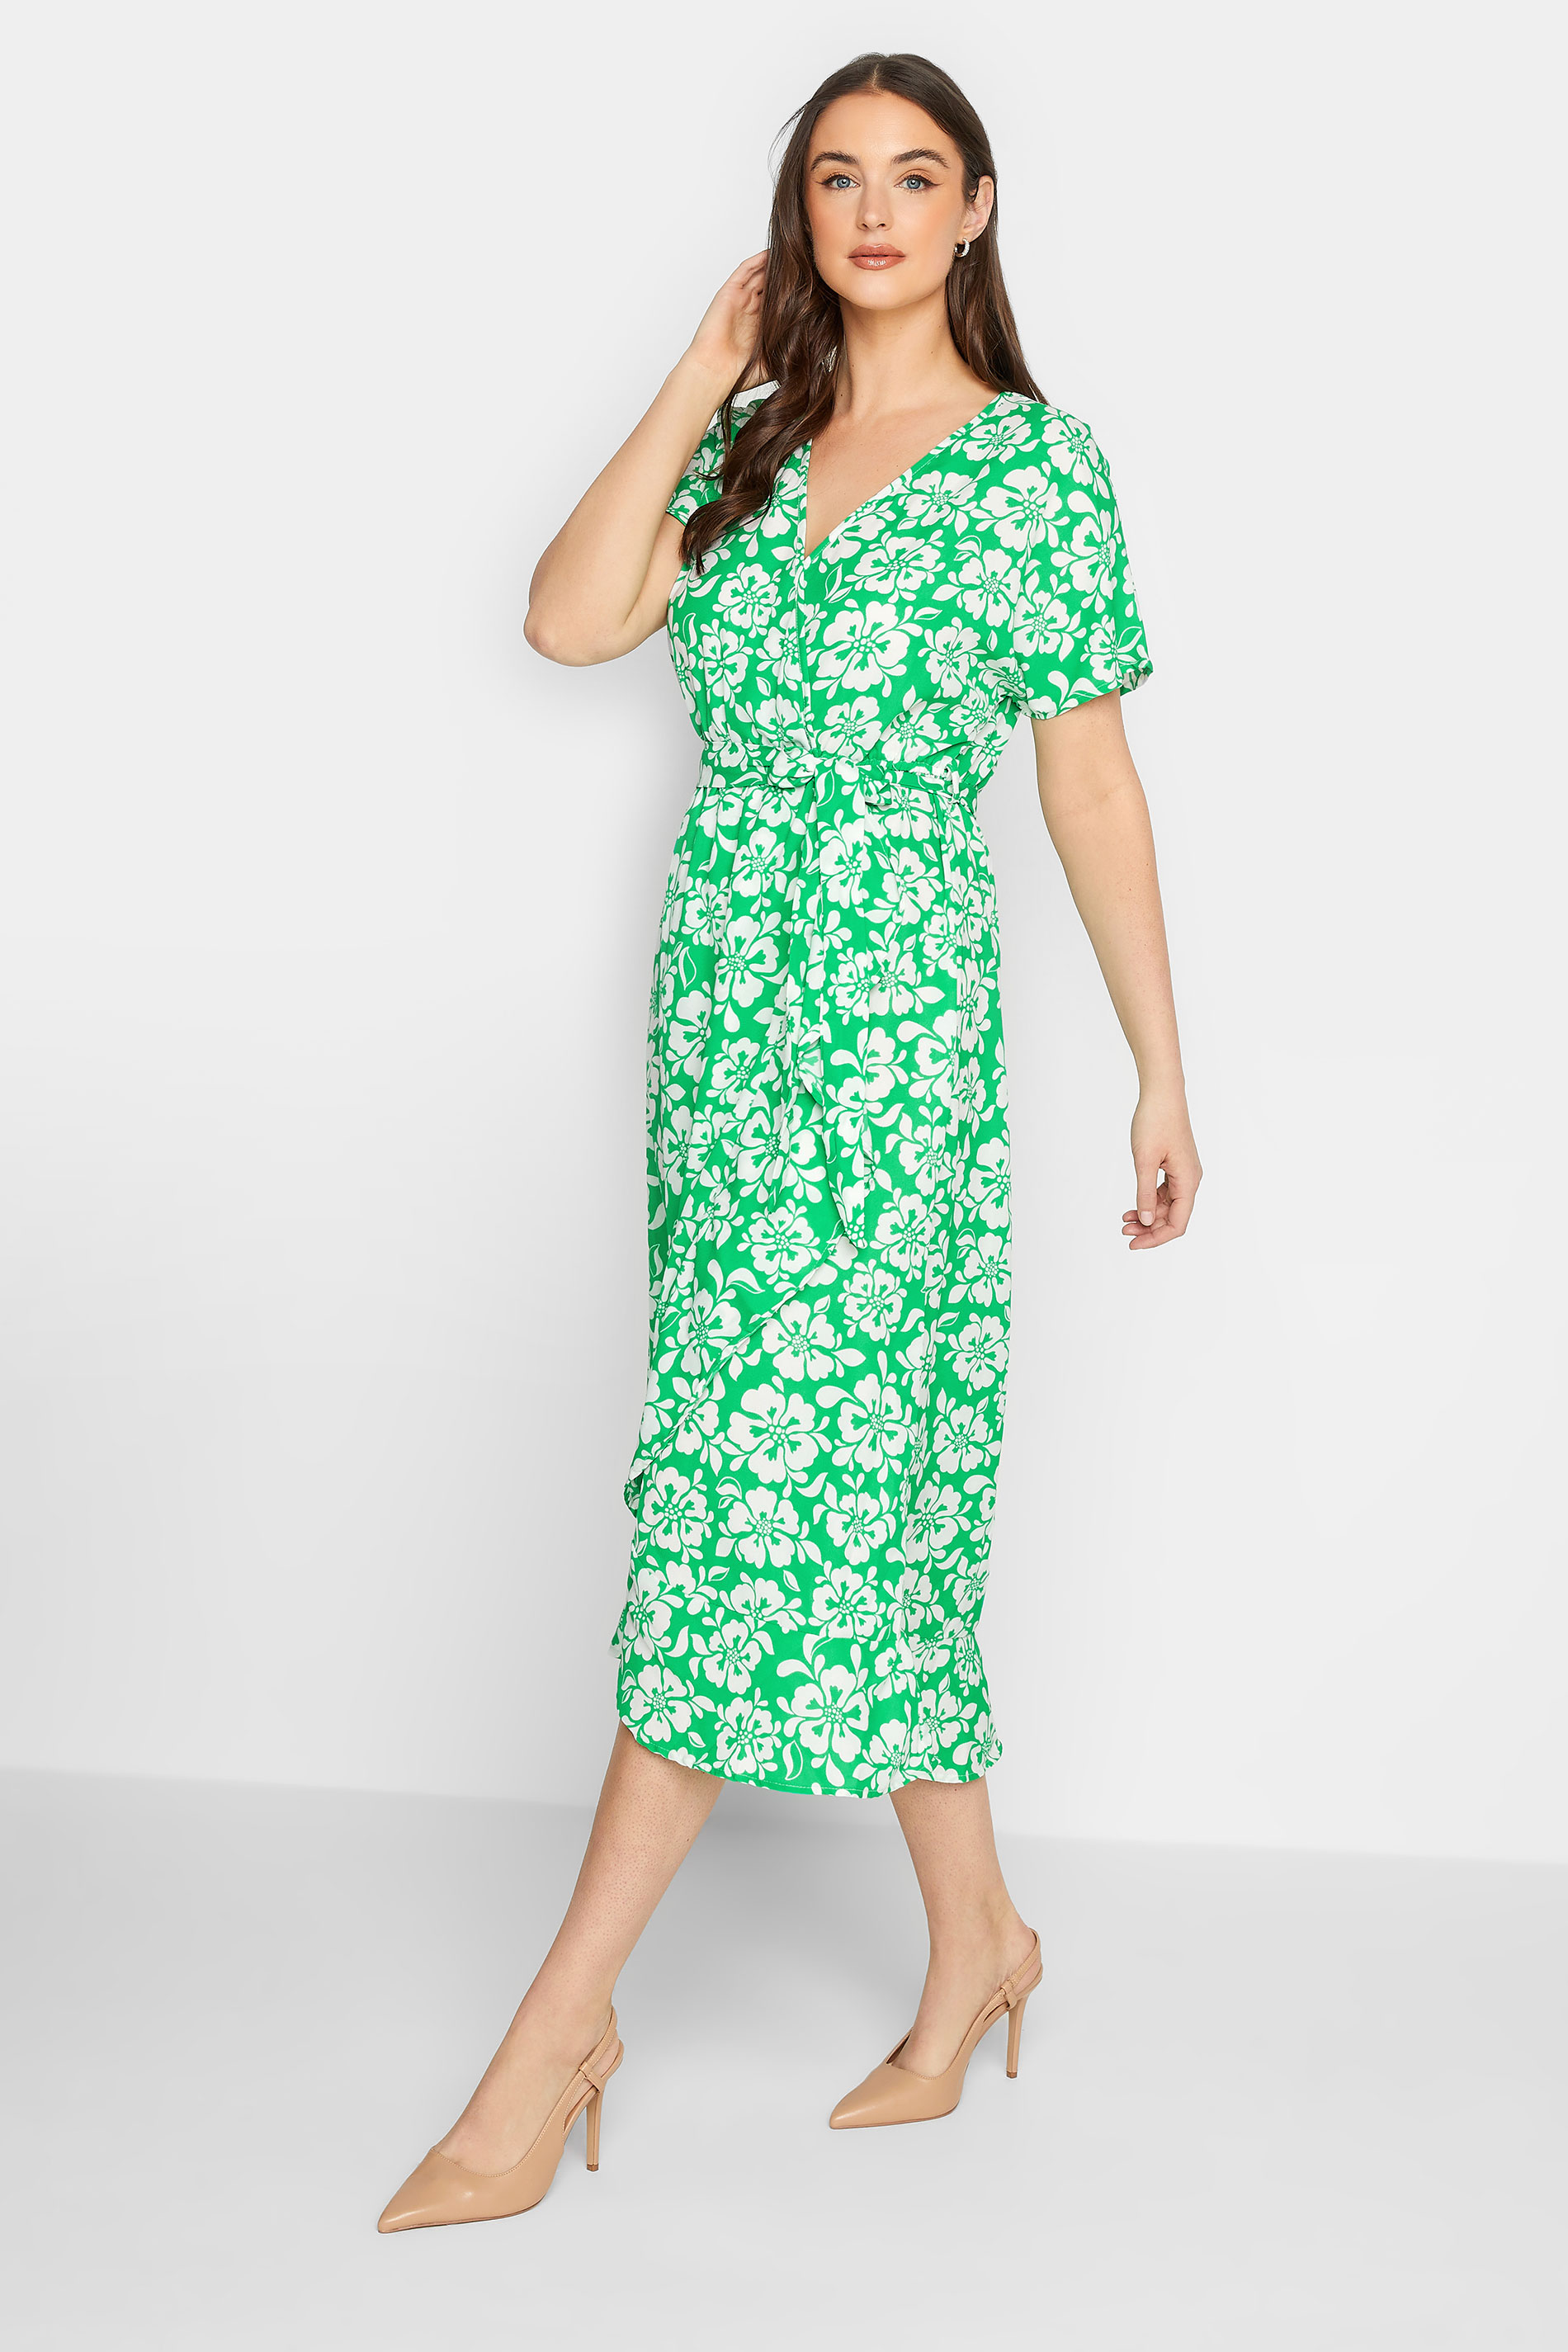 LTS Tall Women's Green Floral Print Wrap Dress | Long Tall Sally  1